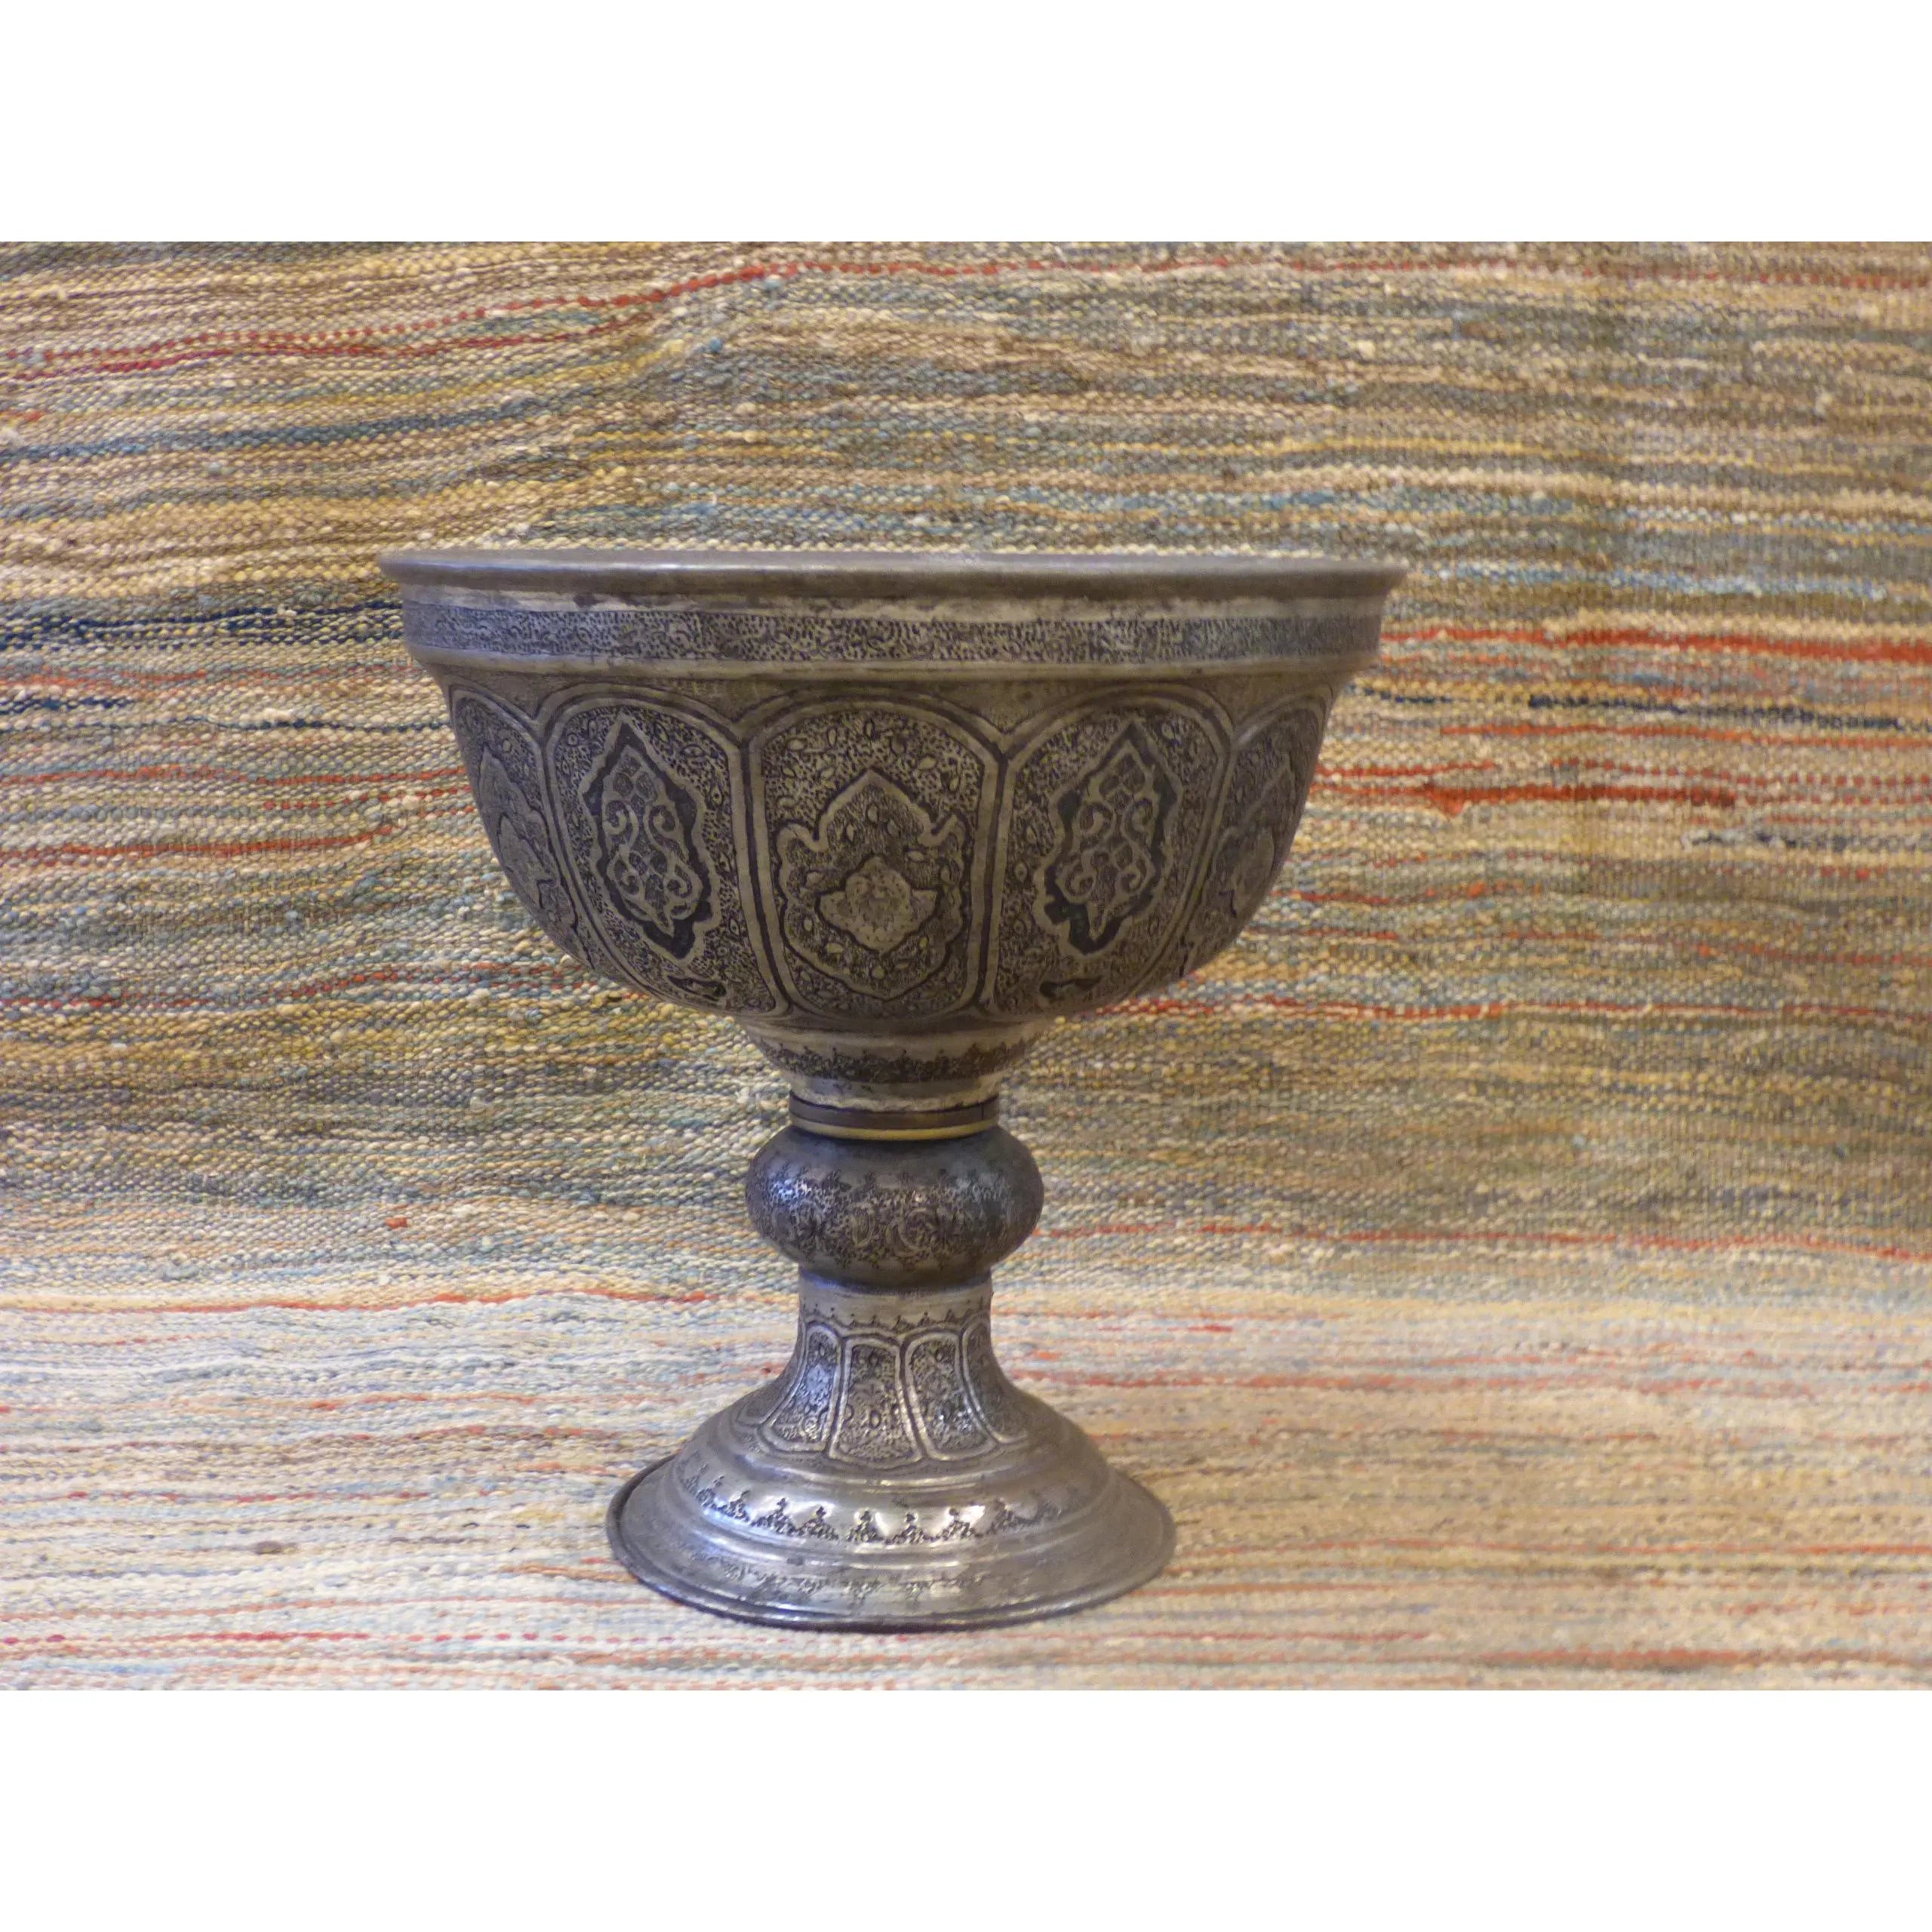 Authentic Art Antique Persian Engraved Brass Vase Ghalamzani 12" X 12" Abcca0107